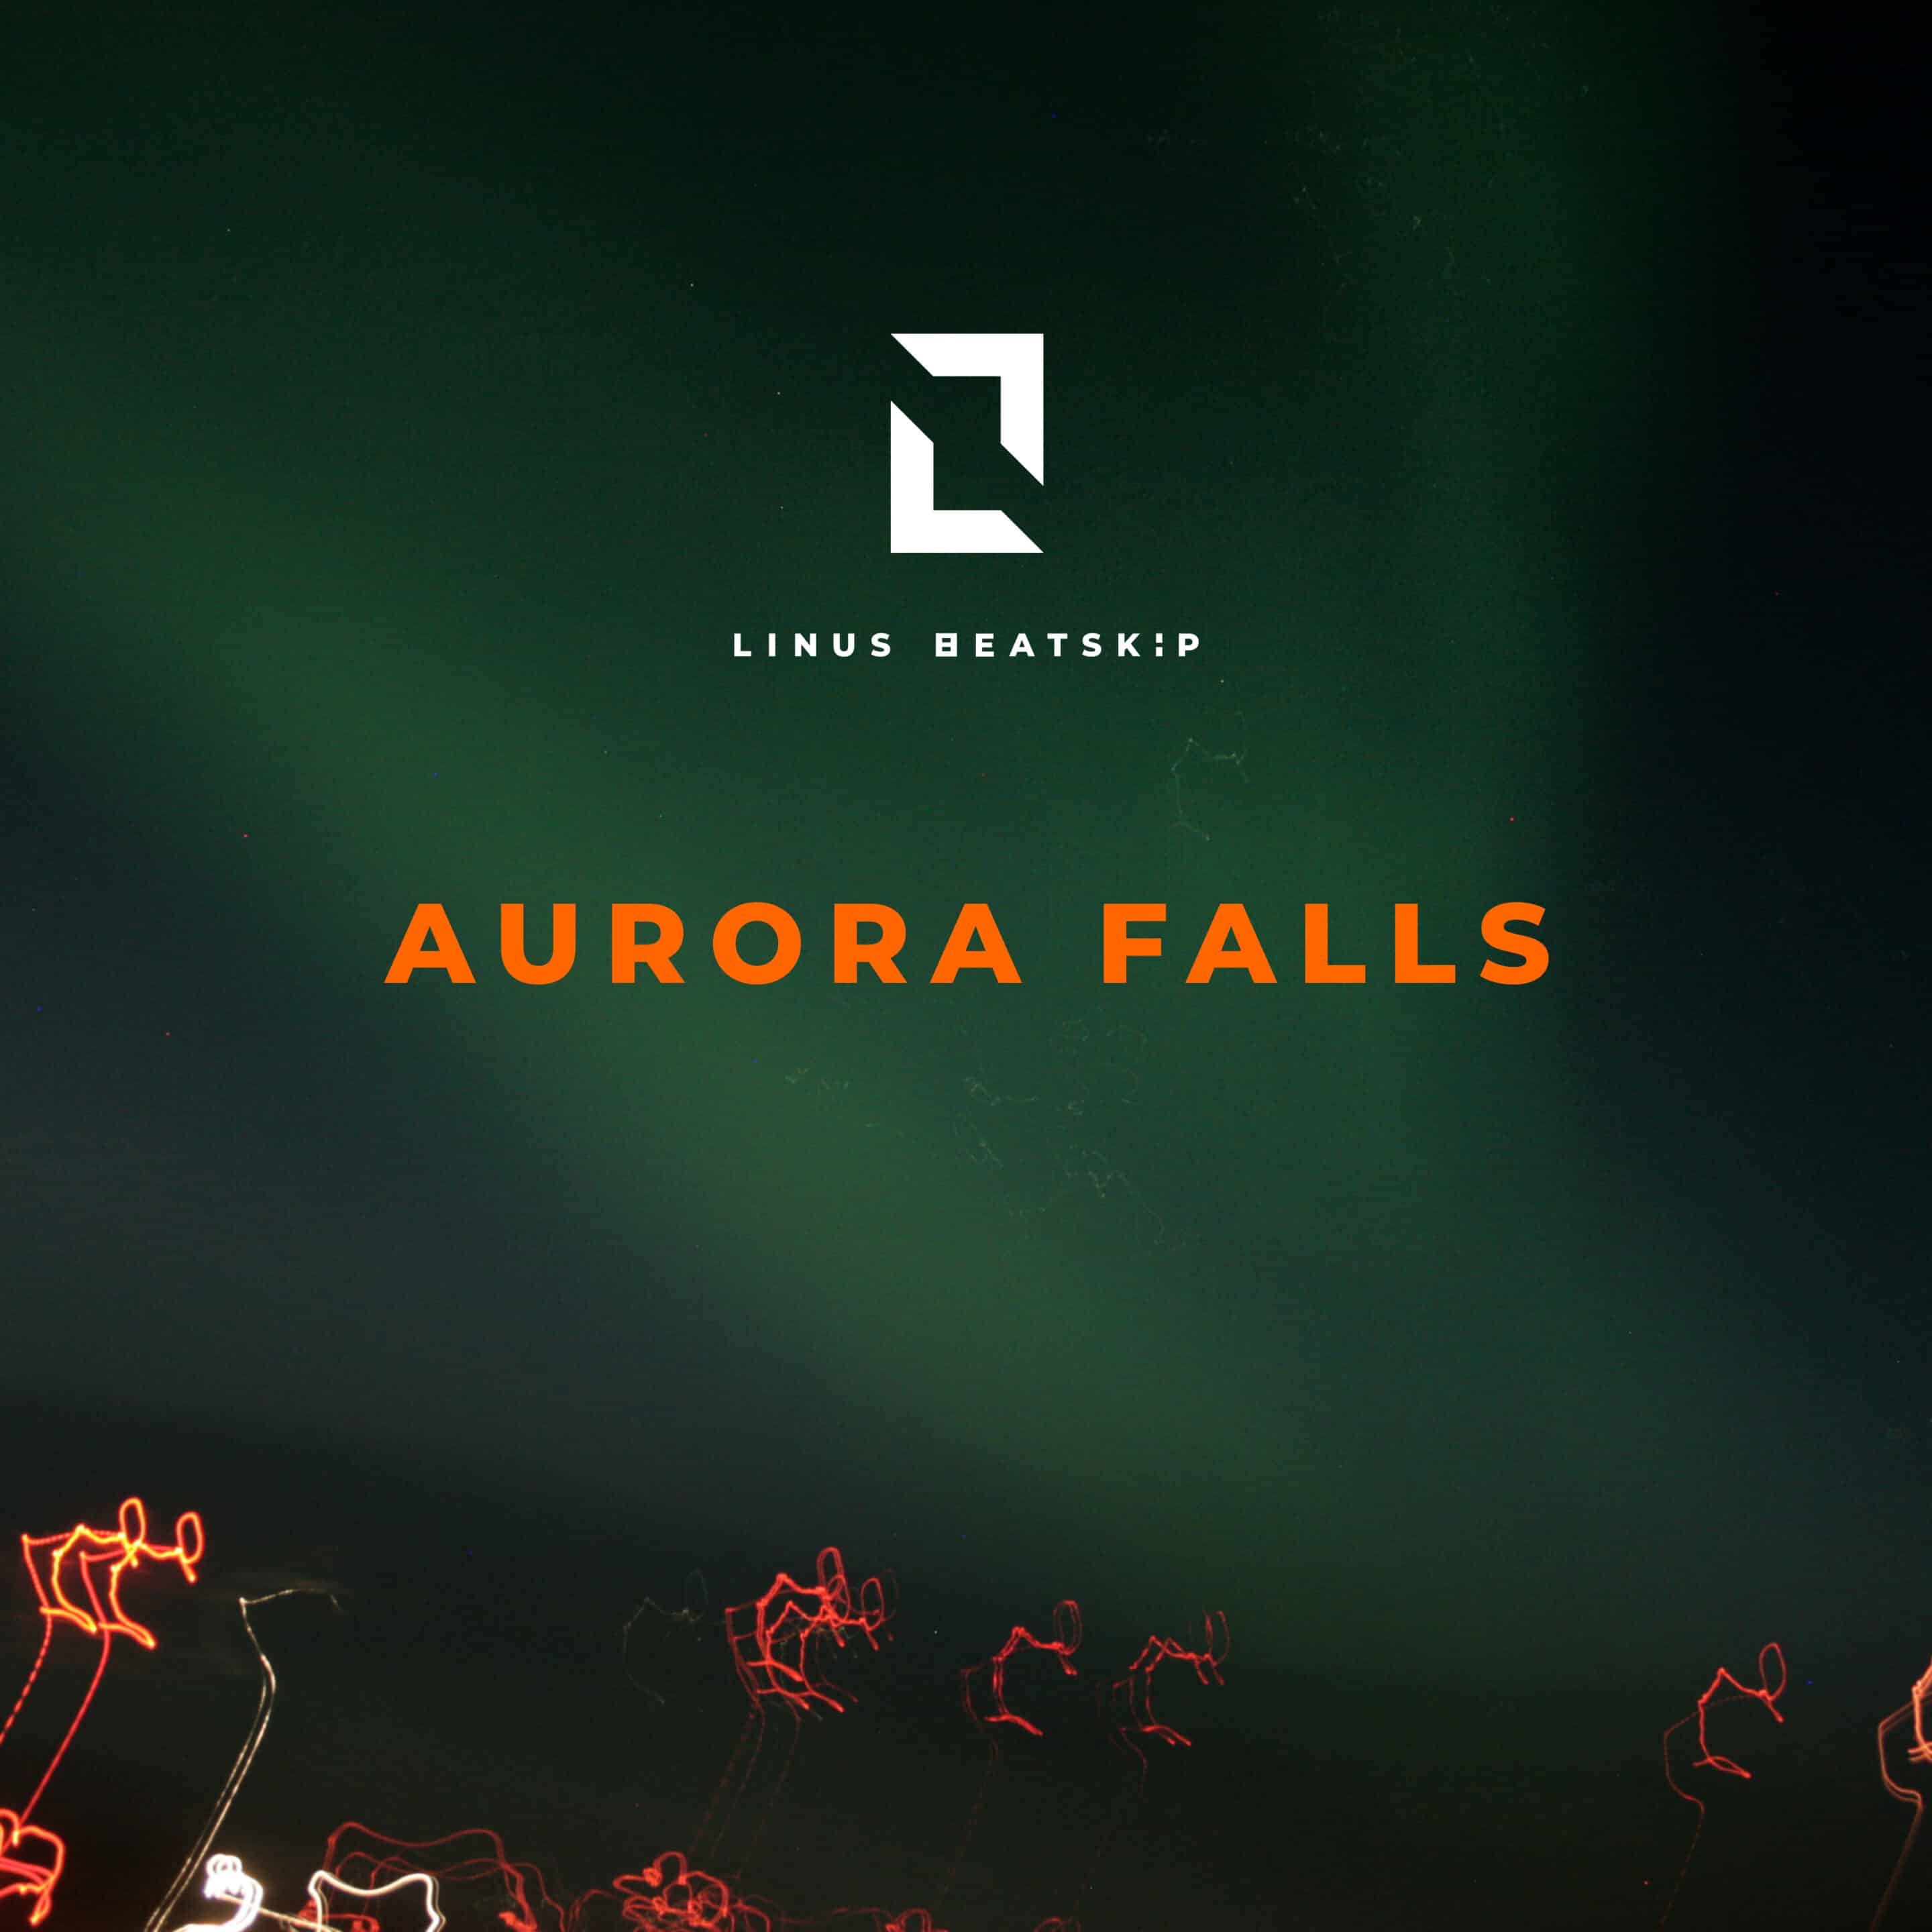 Aurora Falls - LINUS BEATSKiP, Chillout ambient track